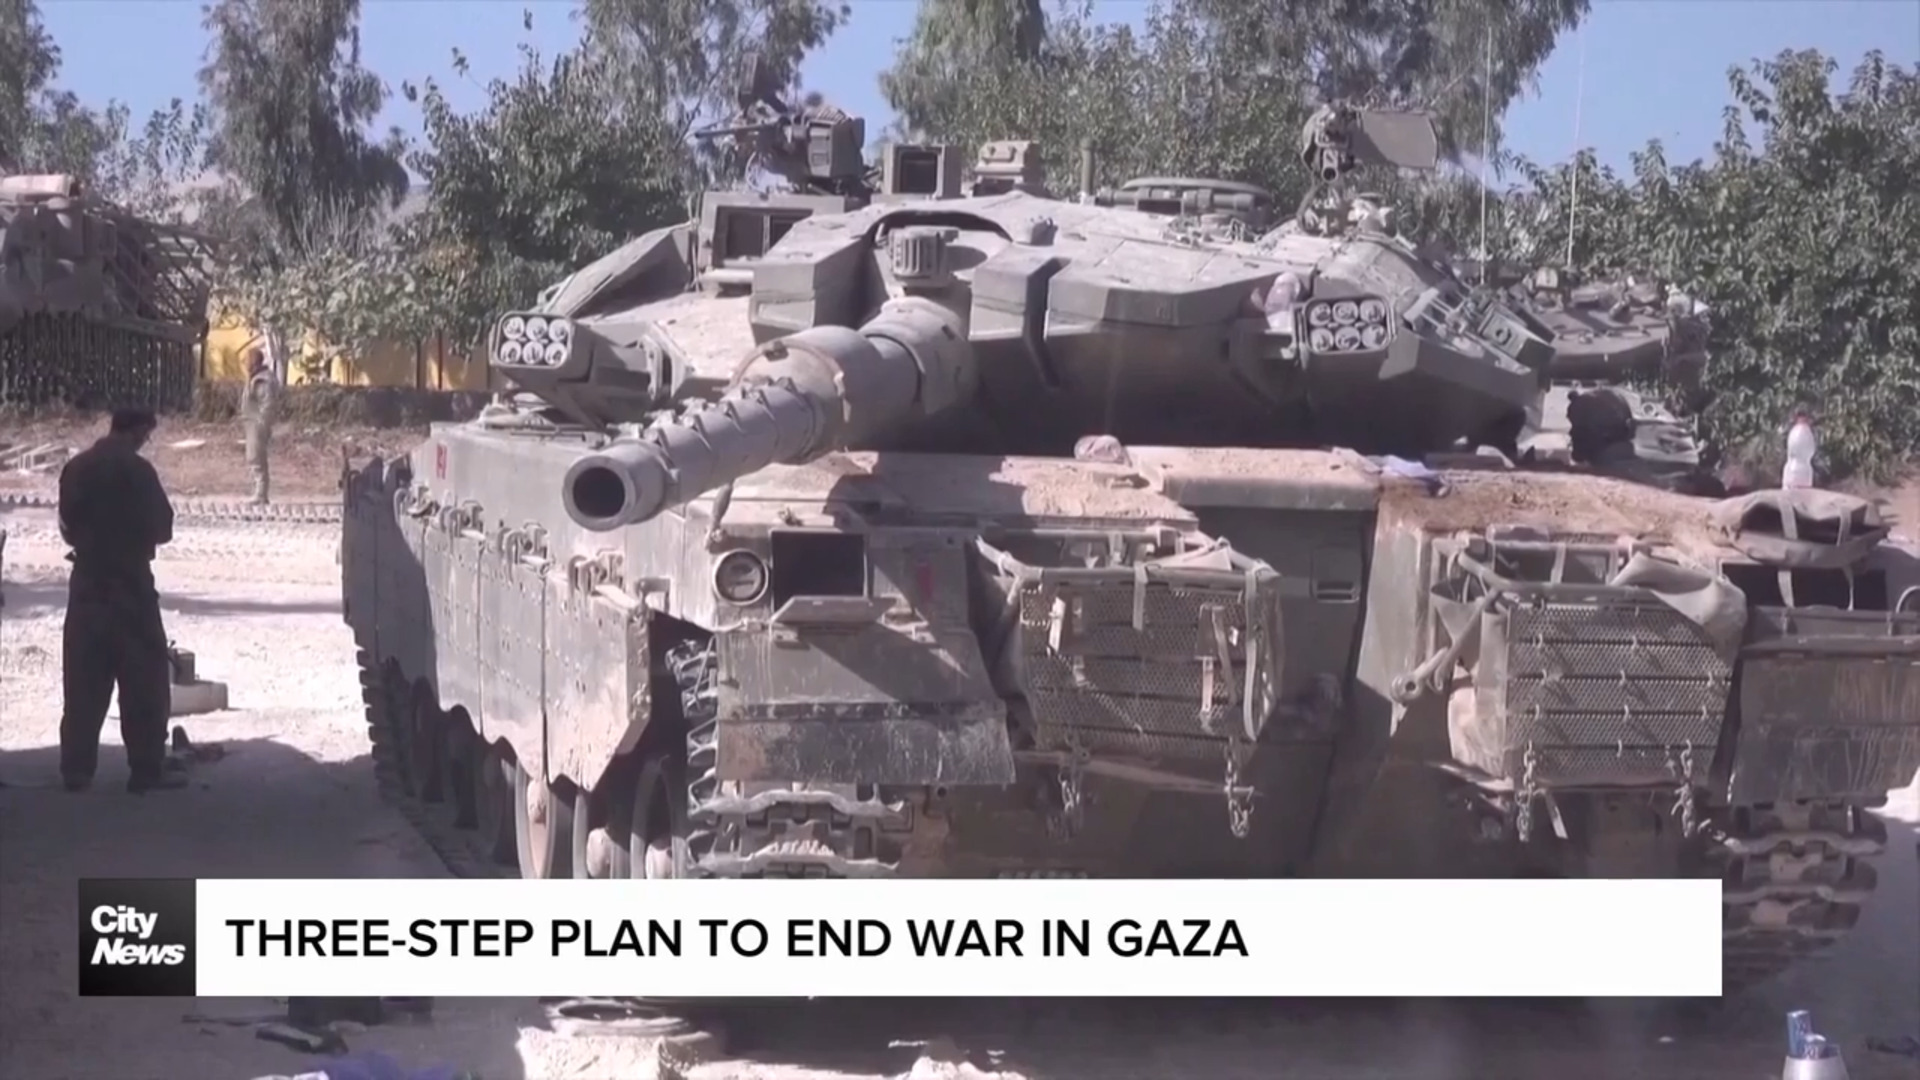 Biden shares proposal to end the war in Gaza